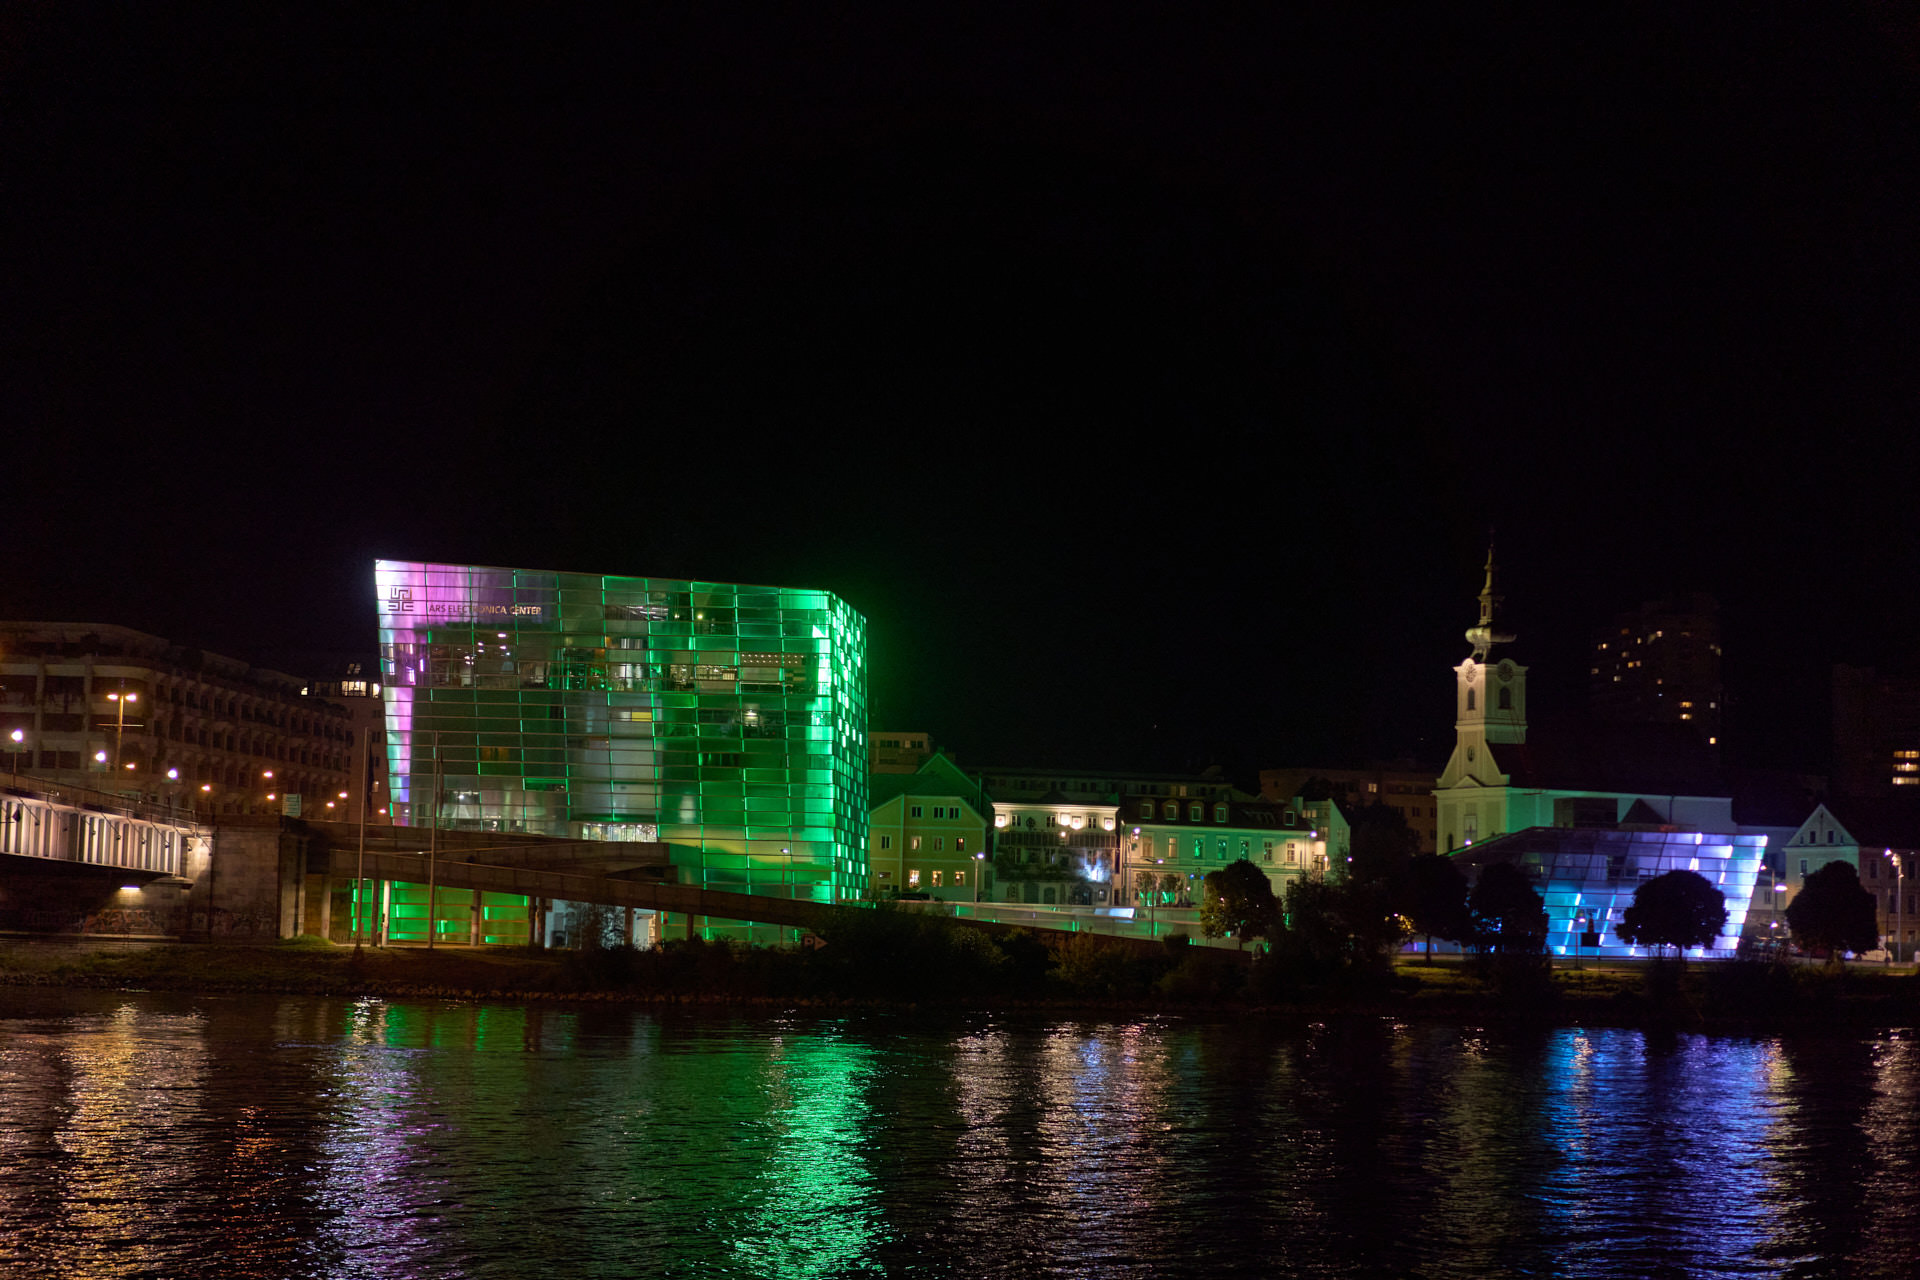 Eventfotograf Corporate Event Flusskreuzfahrt Austria Aufnahmen Ars Electronica Center bei Nacht